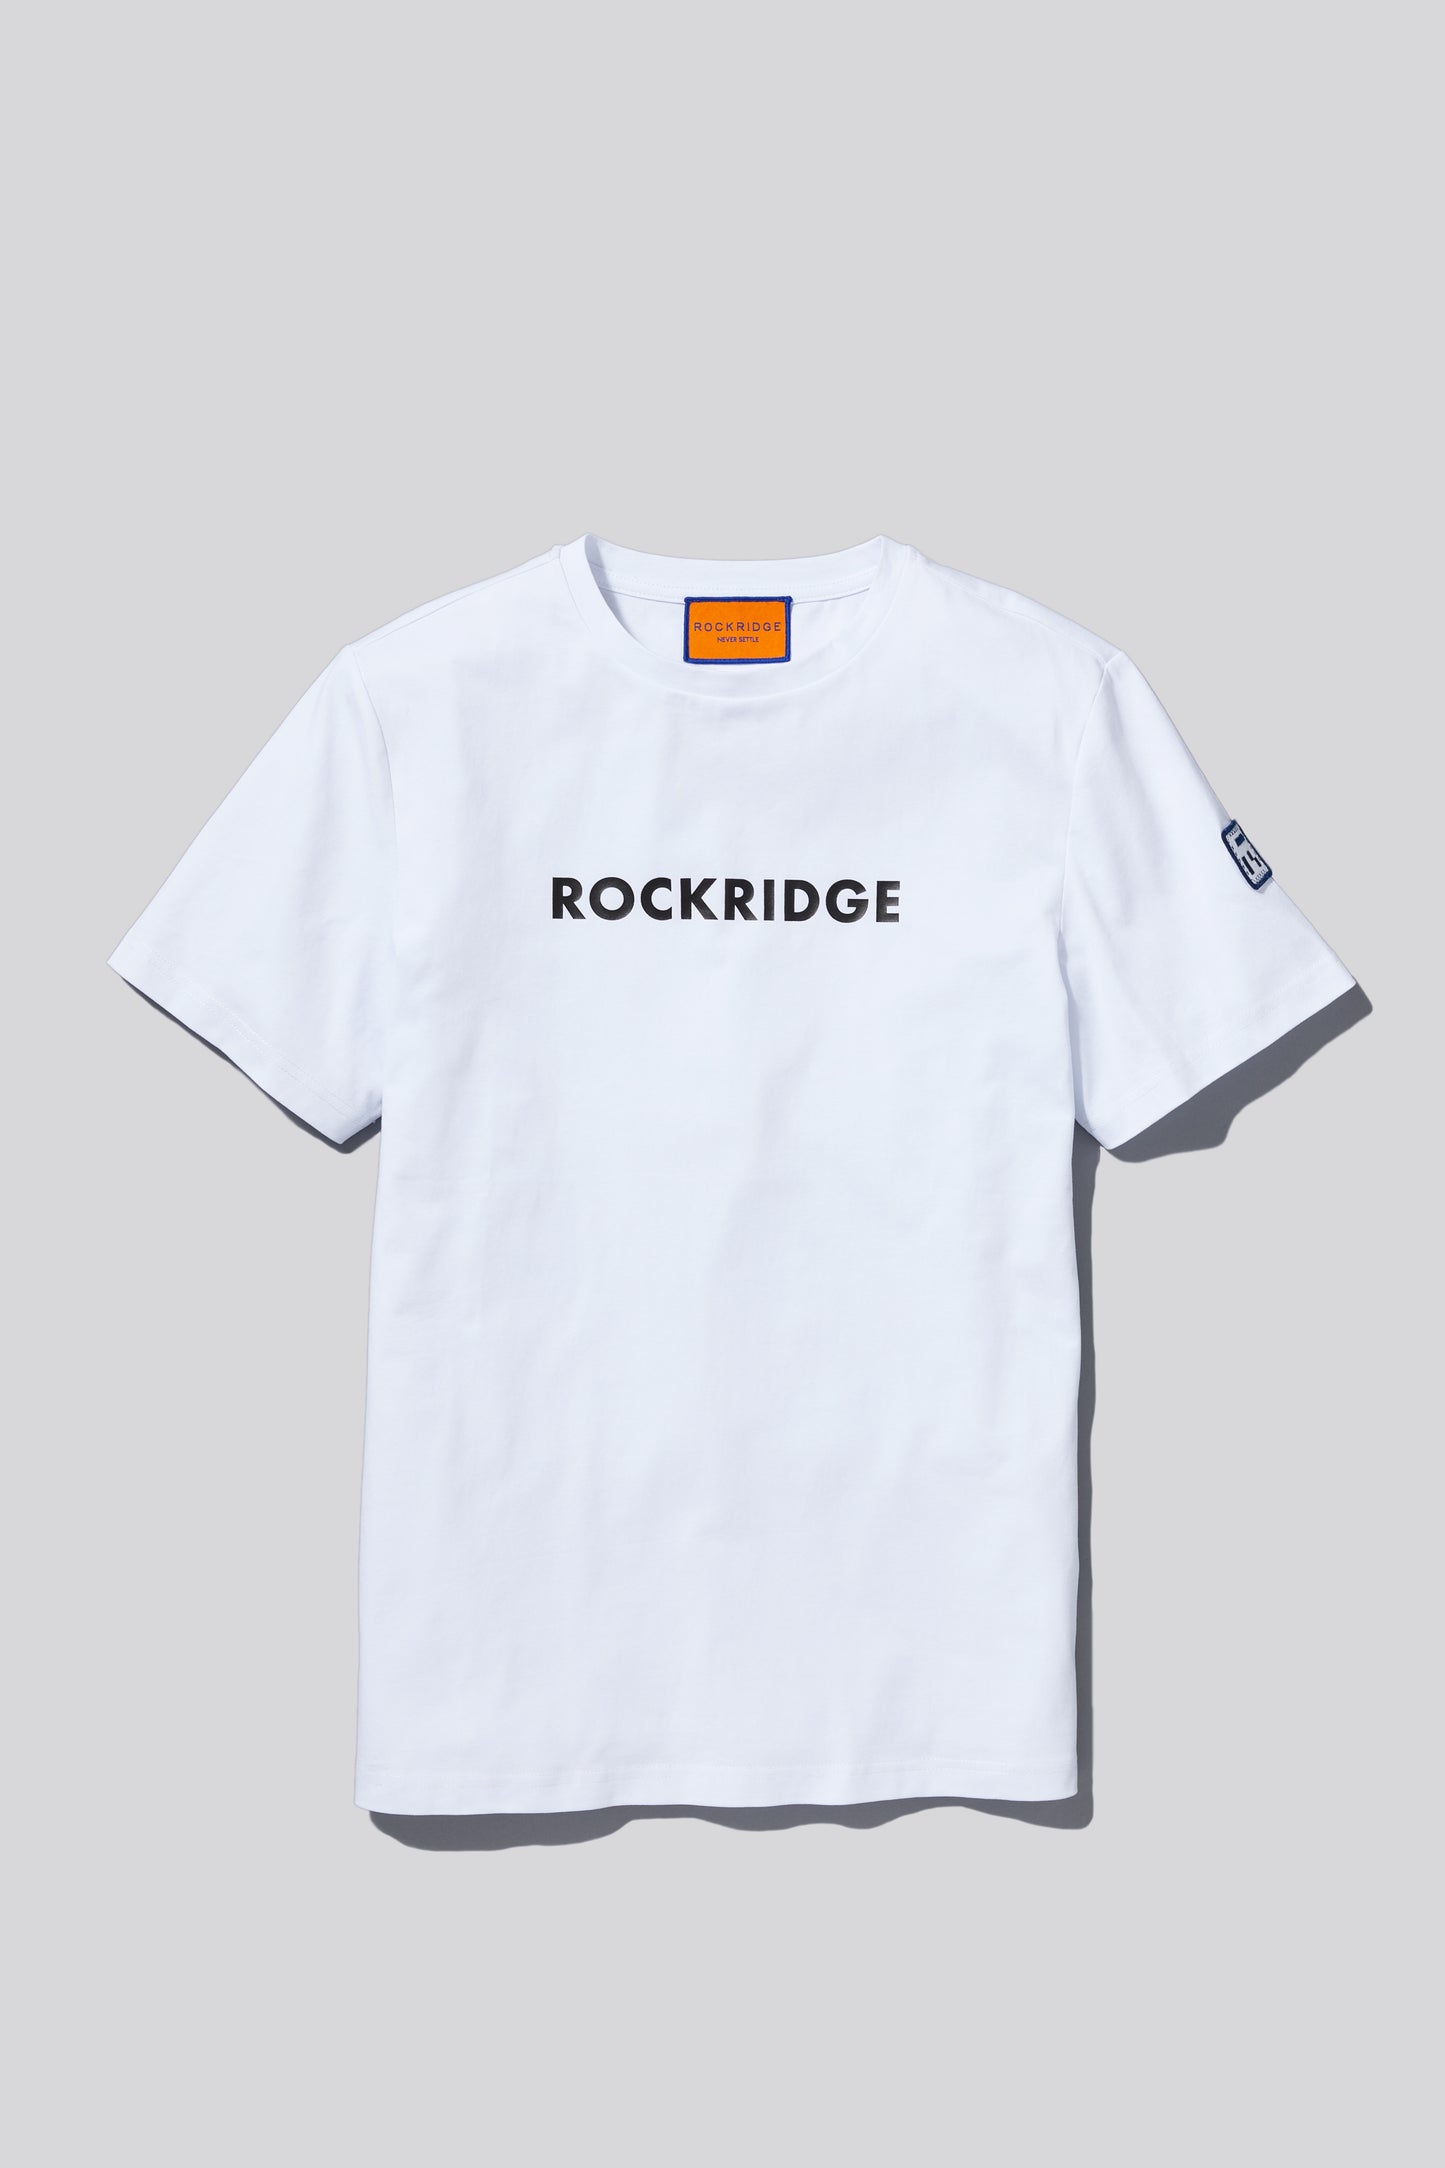 rockridge graphic_t-shirt_white